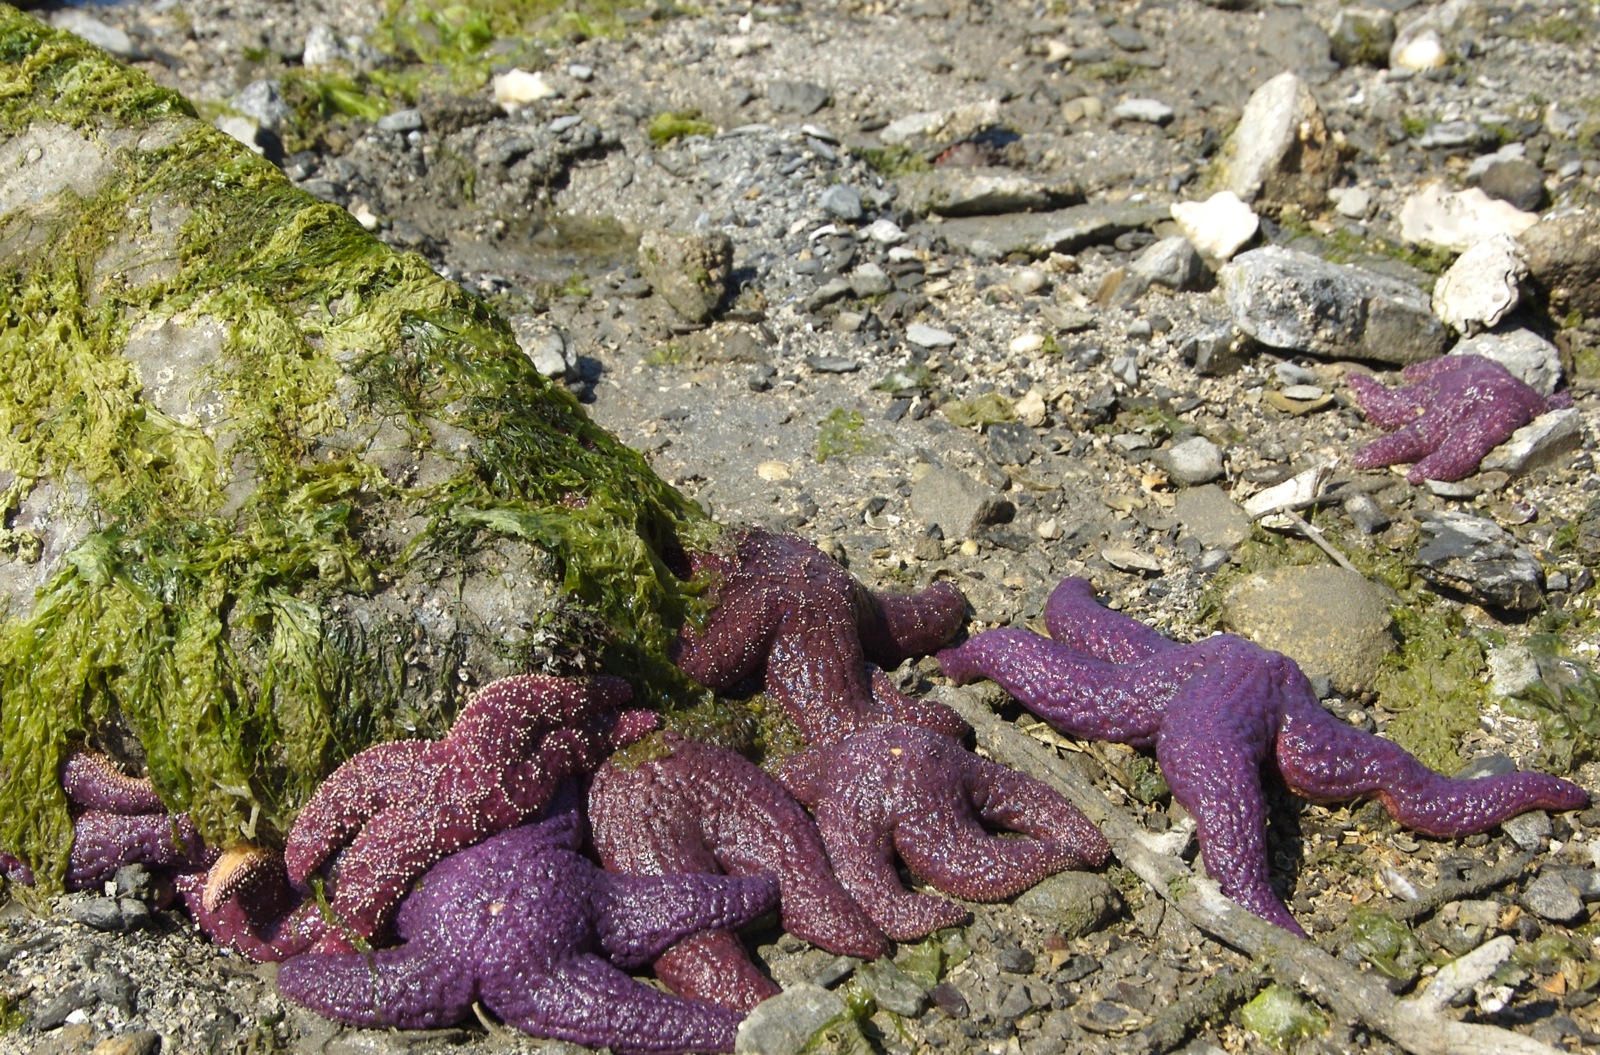 the purple toy is sitting near a rock